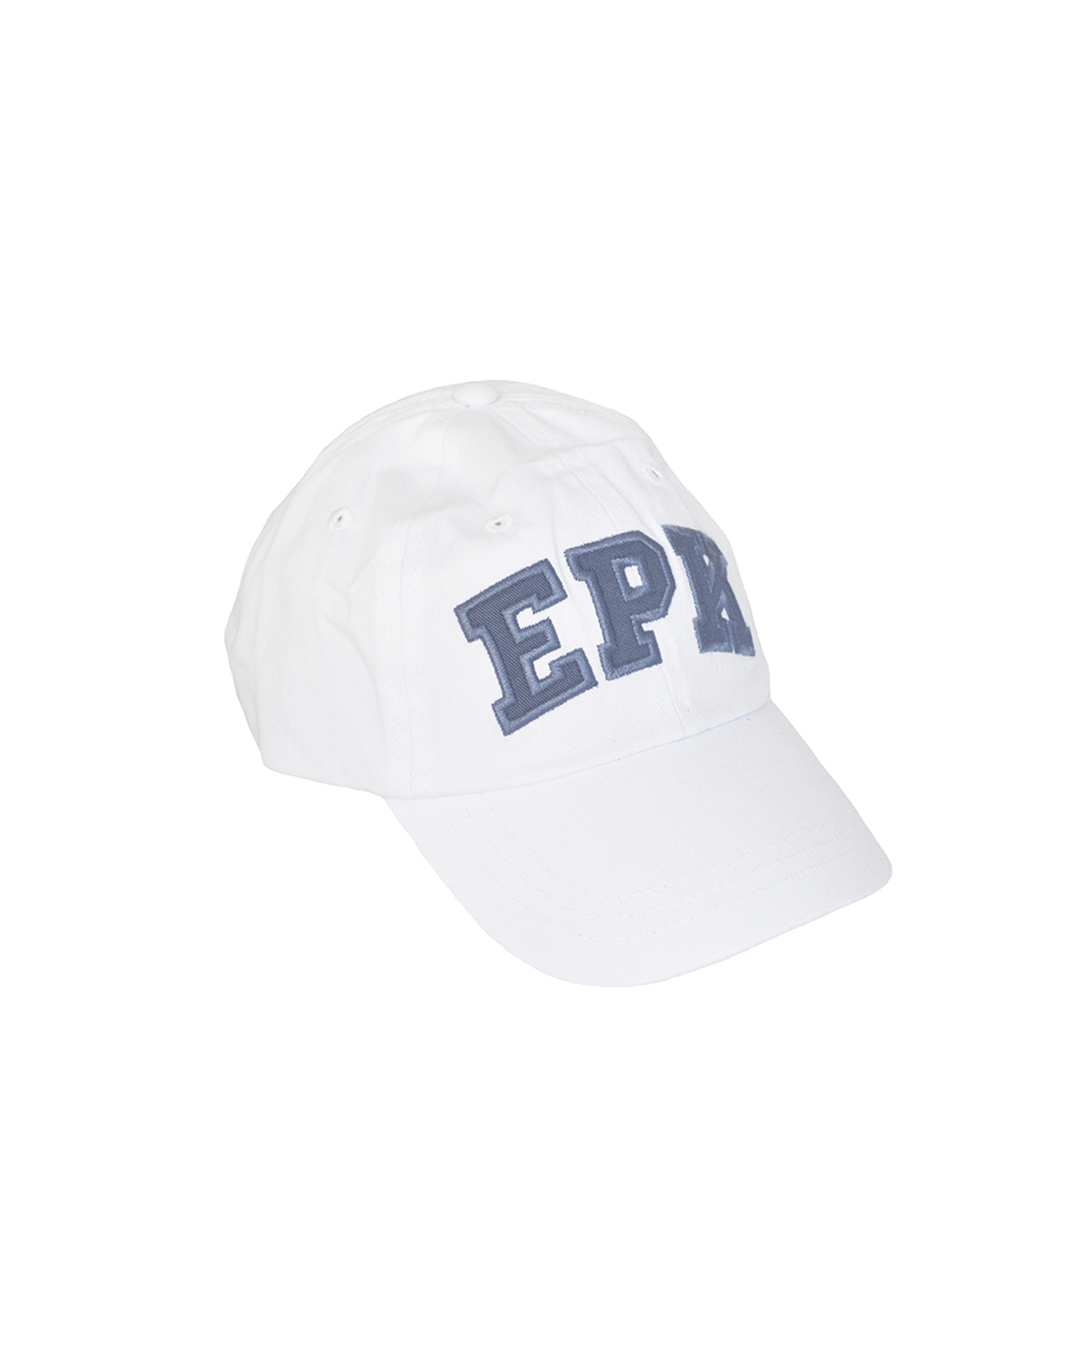 Gorra blanca con EPK en blanco